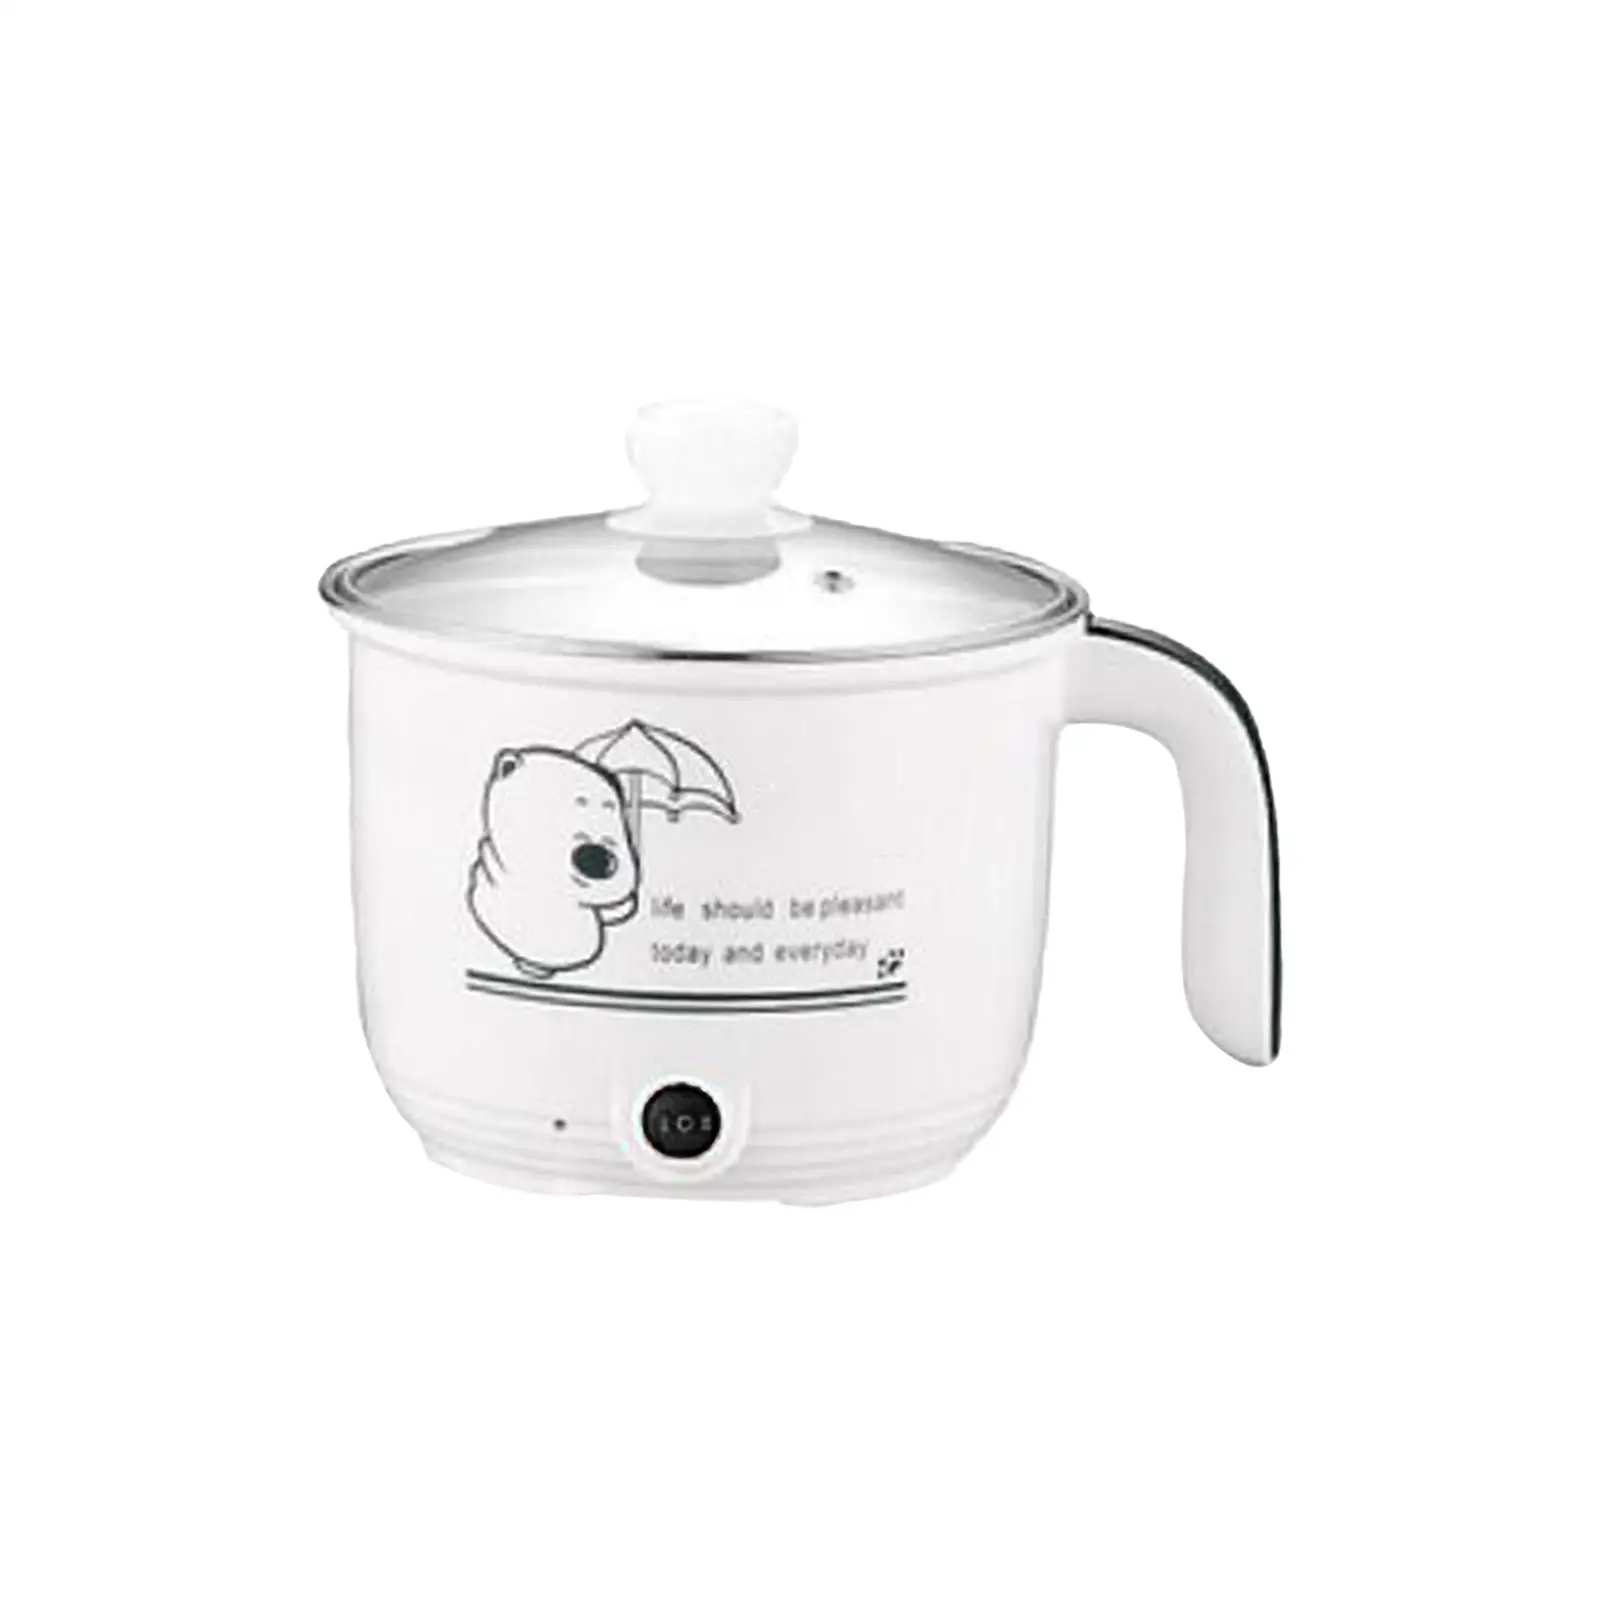 electric Hot Pot Nonstick Household 1.8L Stainless Steel Kitchen Cooking Appliances for Porridge Oatmeal Eggs Noodles Ramen